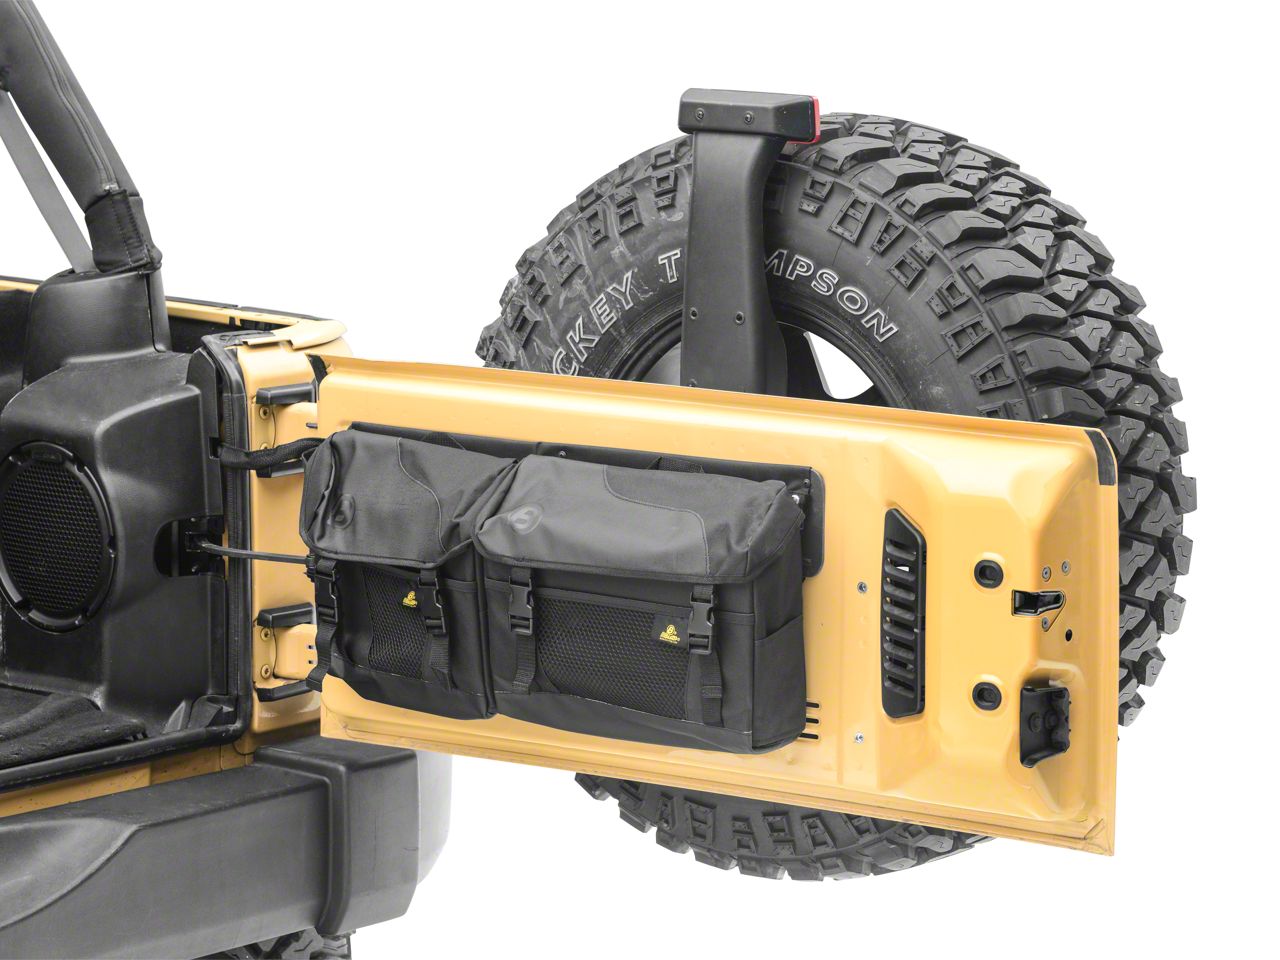 Canvas Tailgate Cargo Storage Bag & Tool Kit Organizer Pockets For Jeep Wrangler